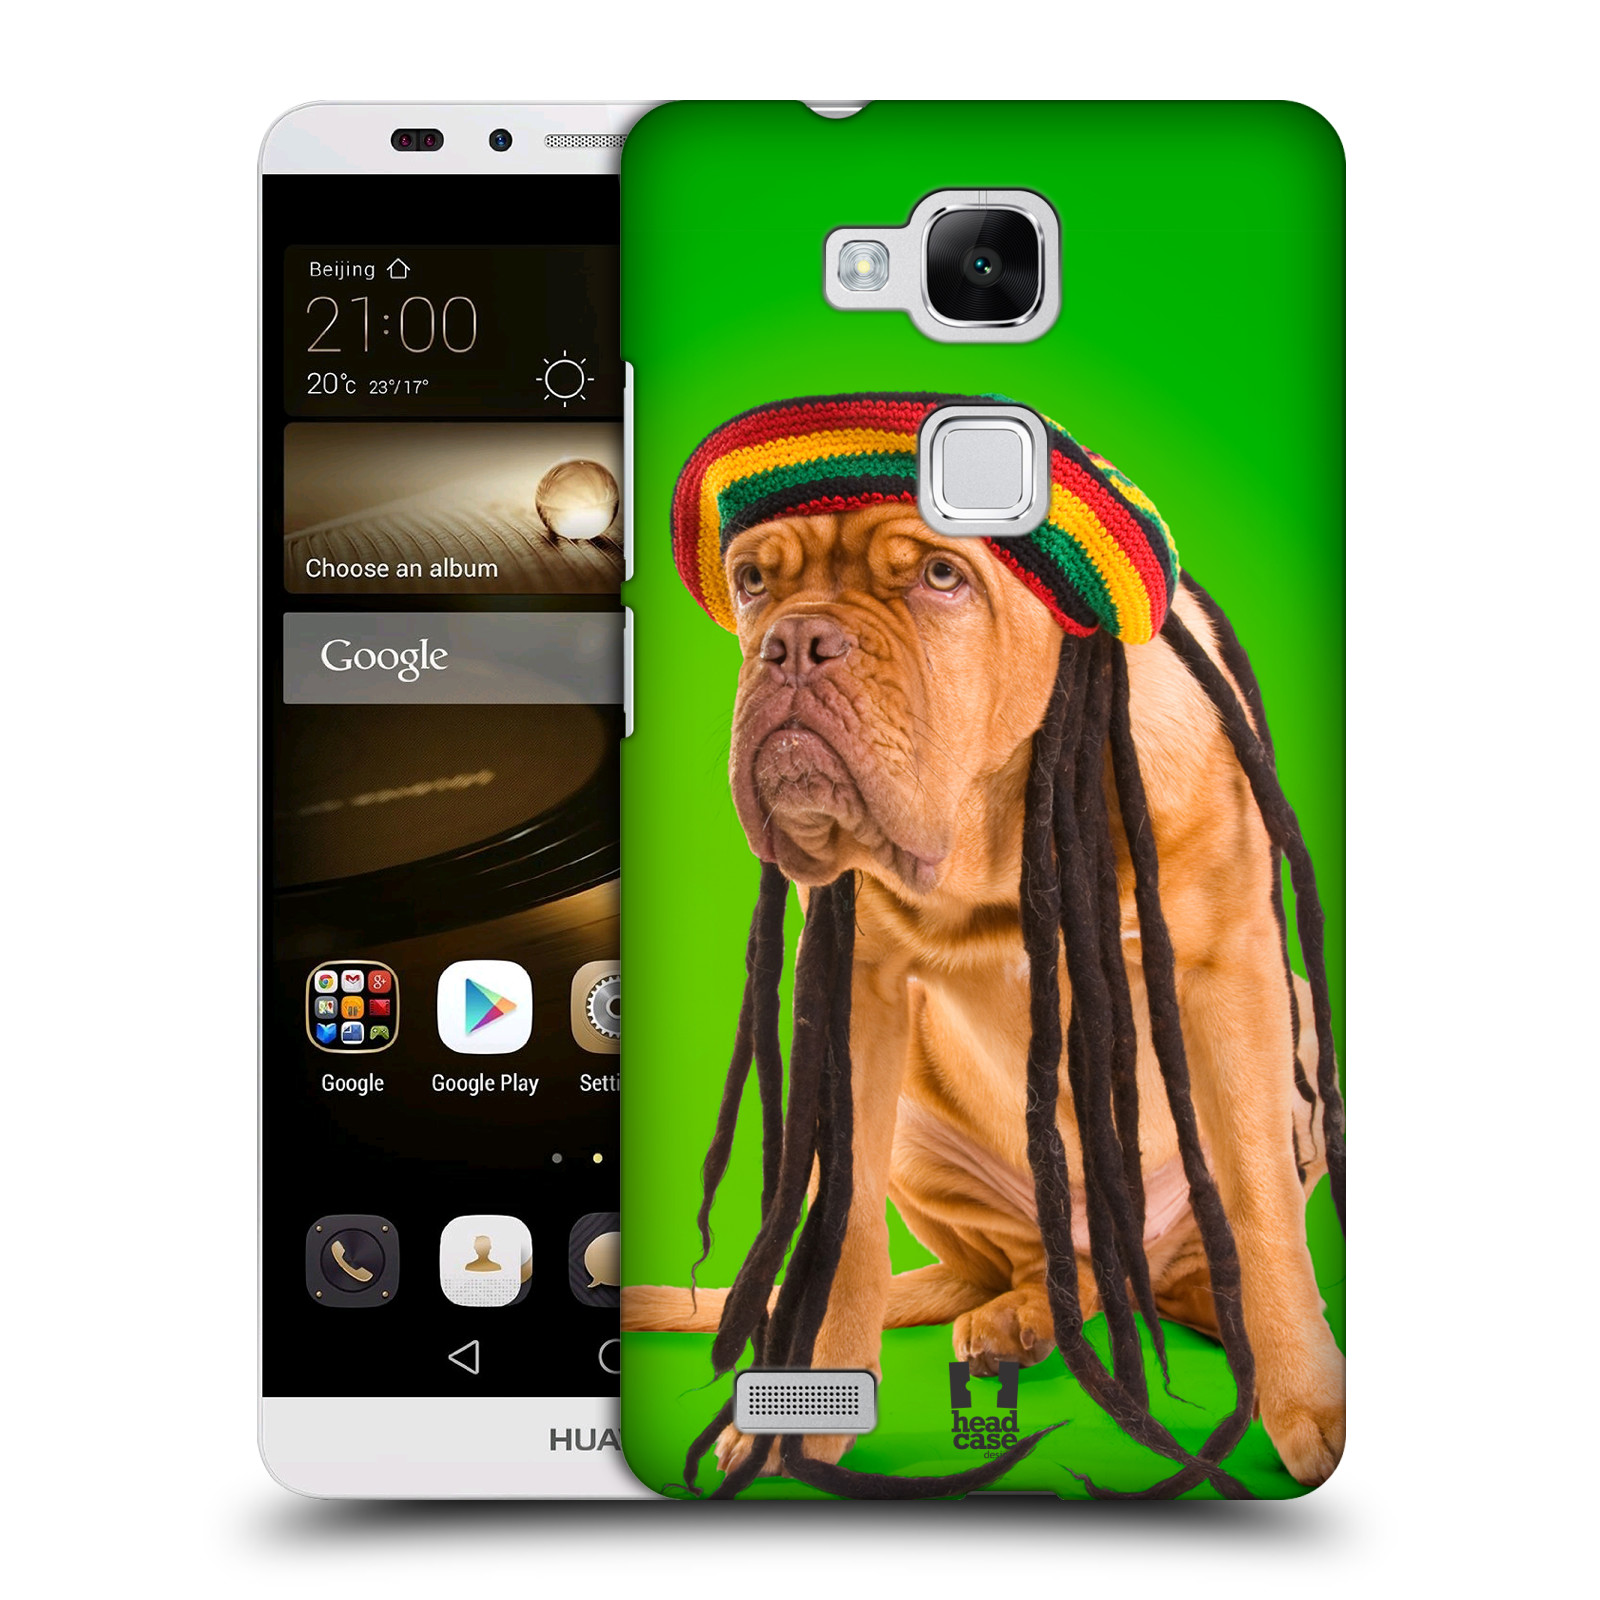 HEAD CASE plastový obal na mobil Huawei Mate 7 vzor Legrační zvířátka pejsek dredy Rastafarián